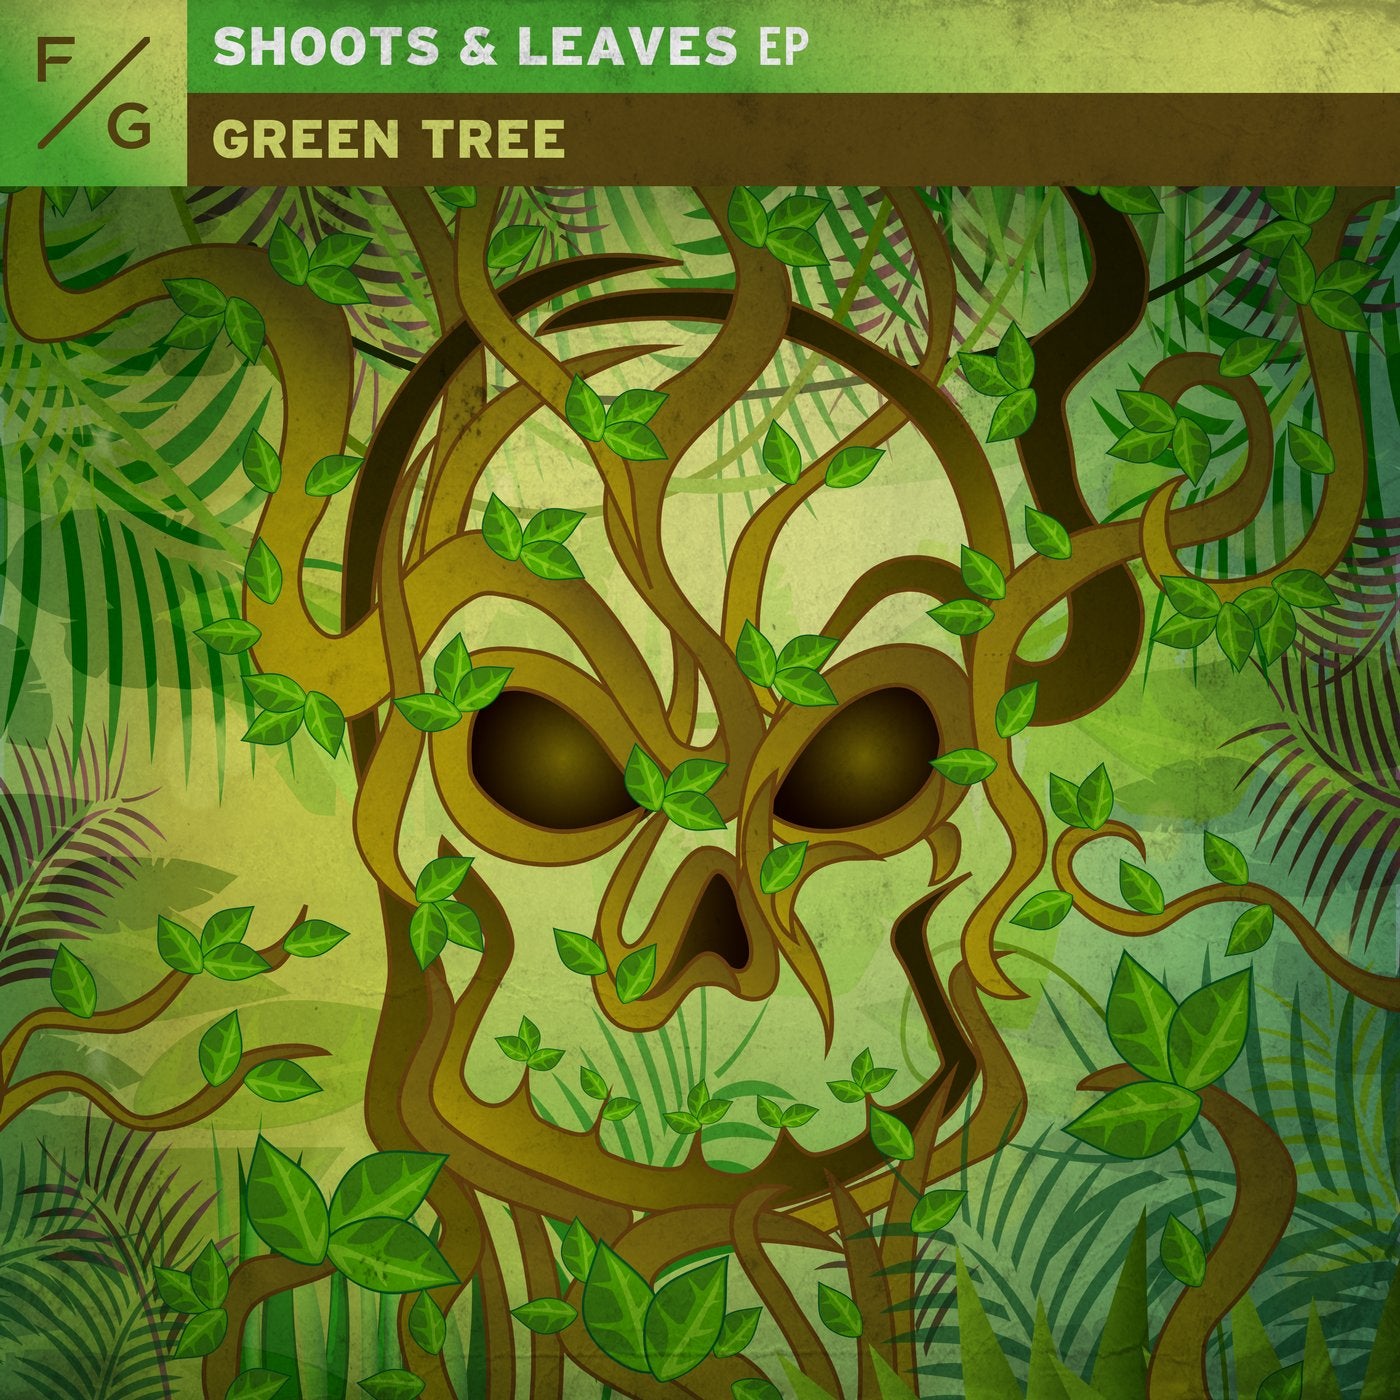 Shoots & Leaves EP